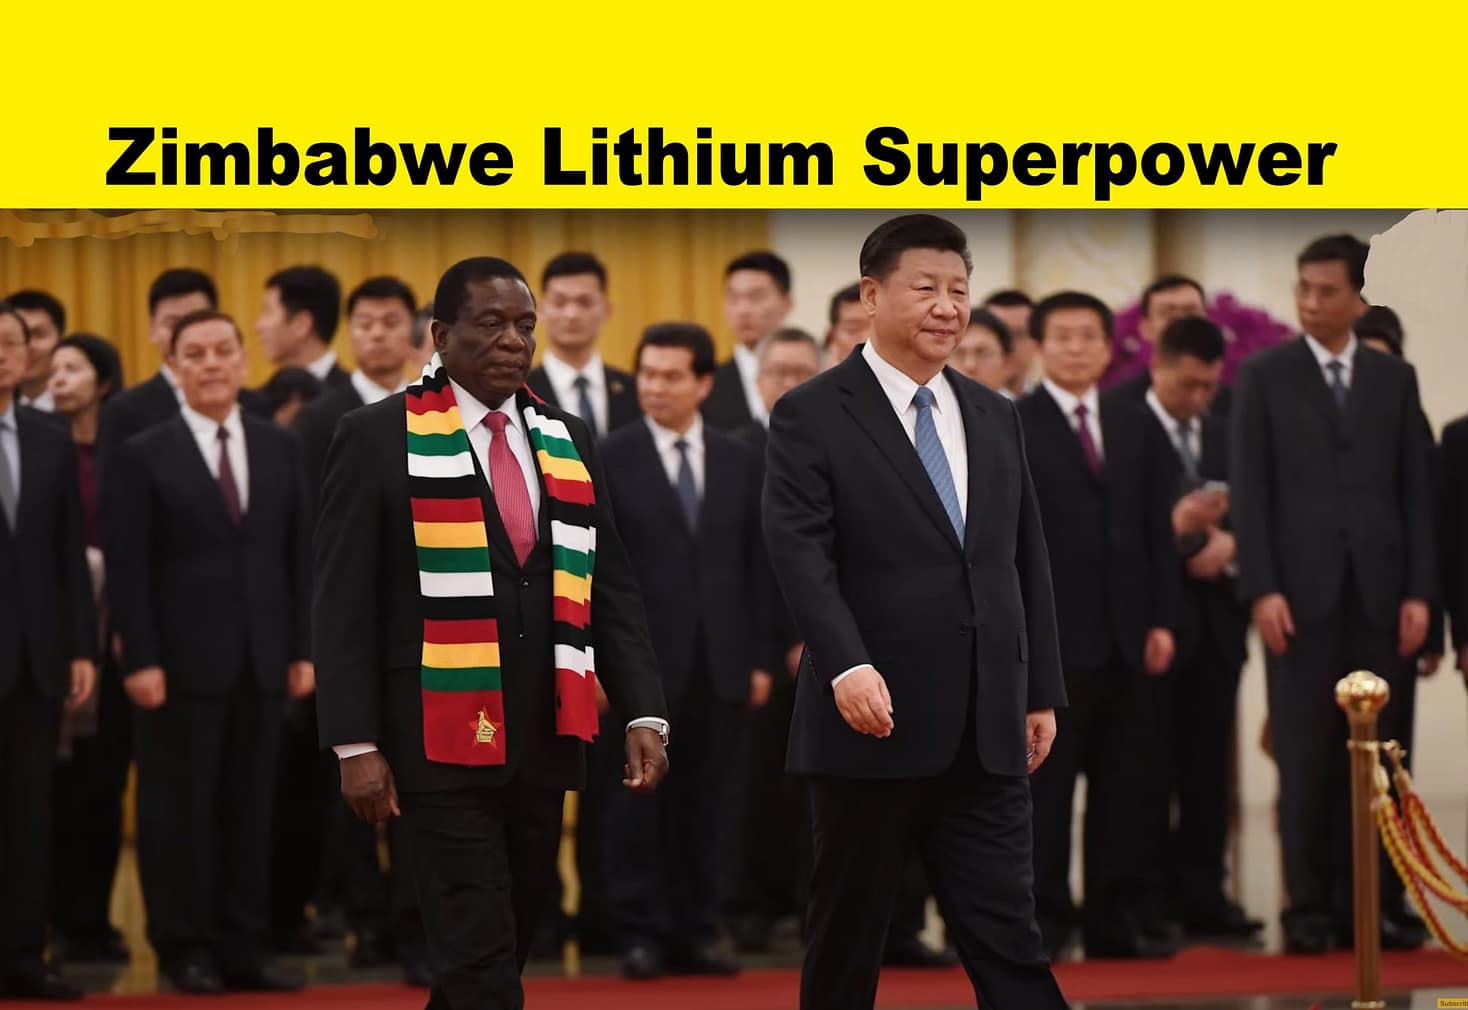 Zimbabwe have massive lithium resources